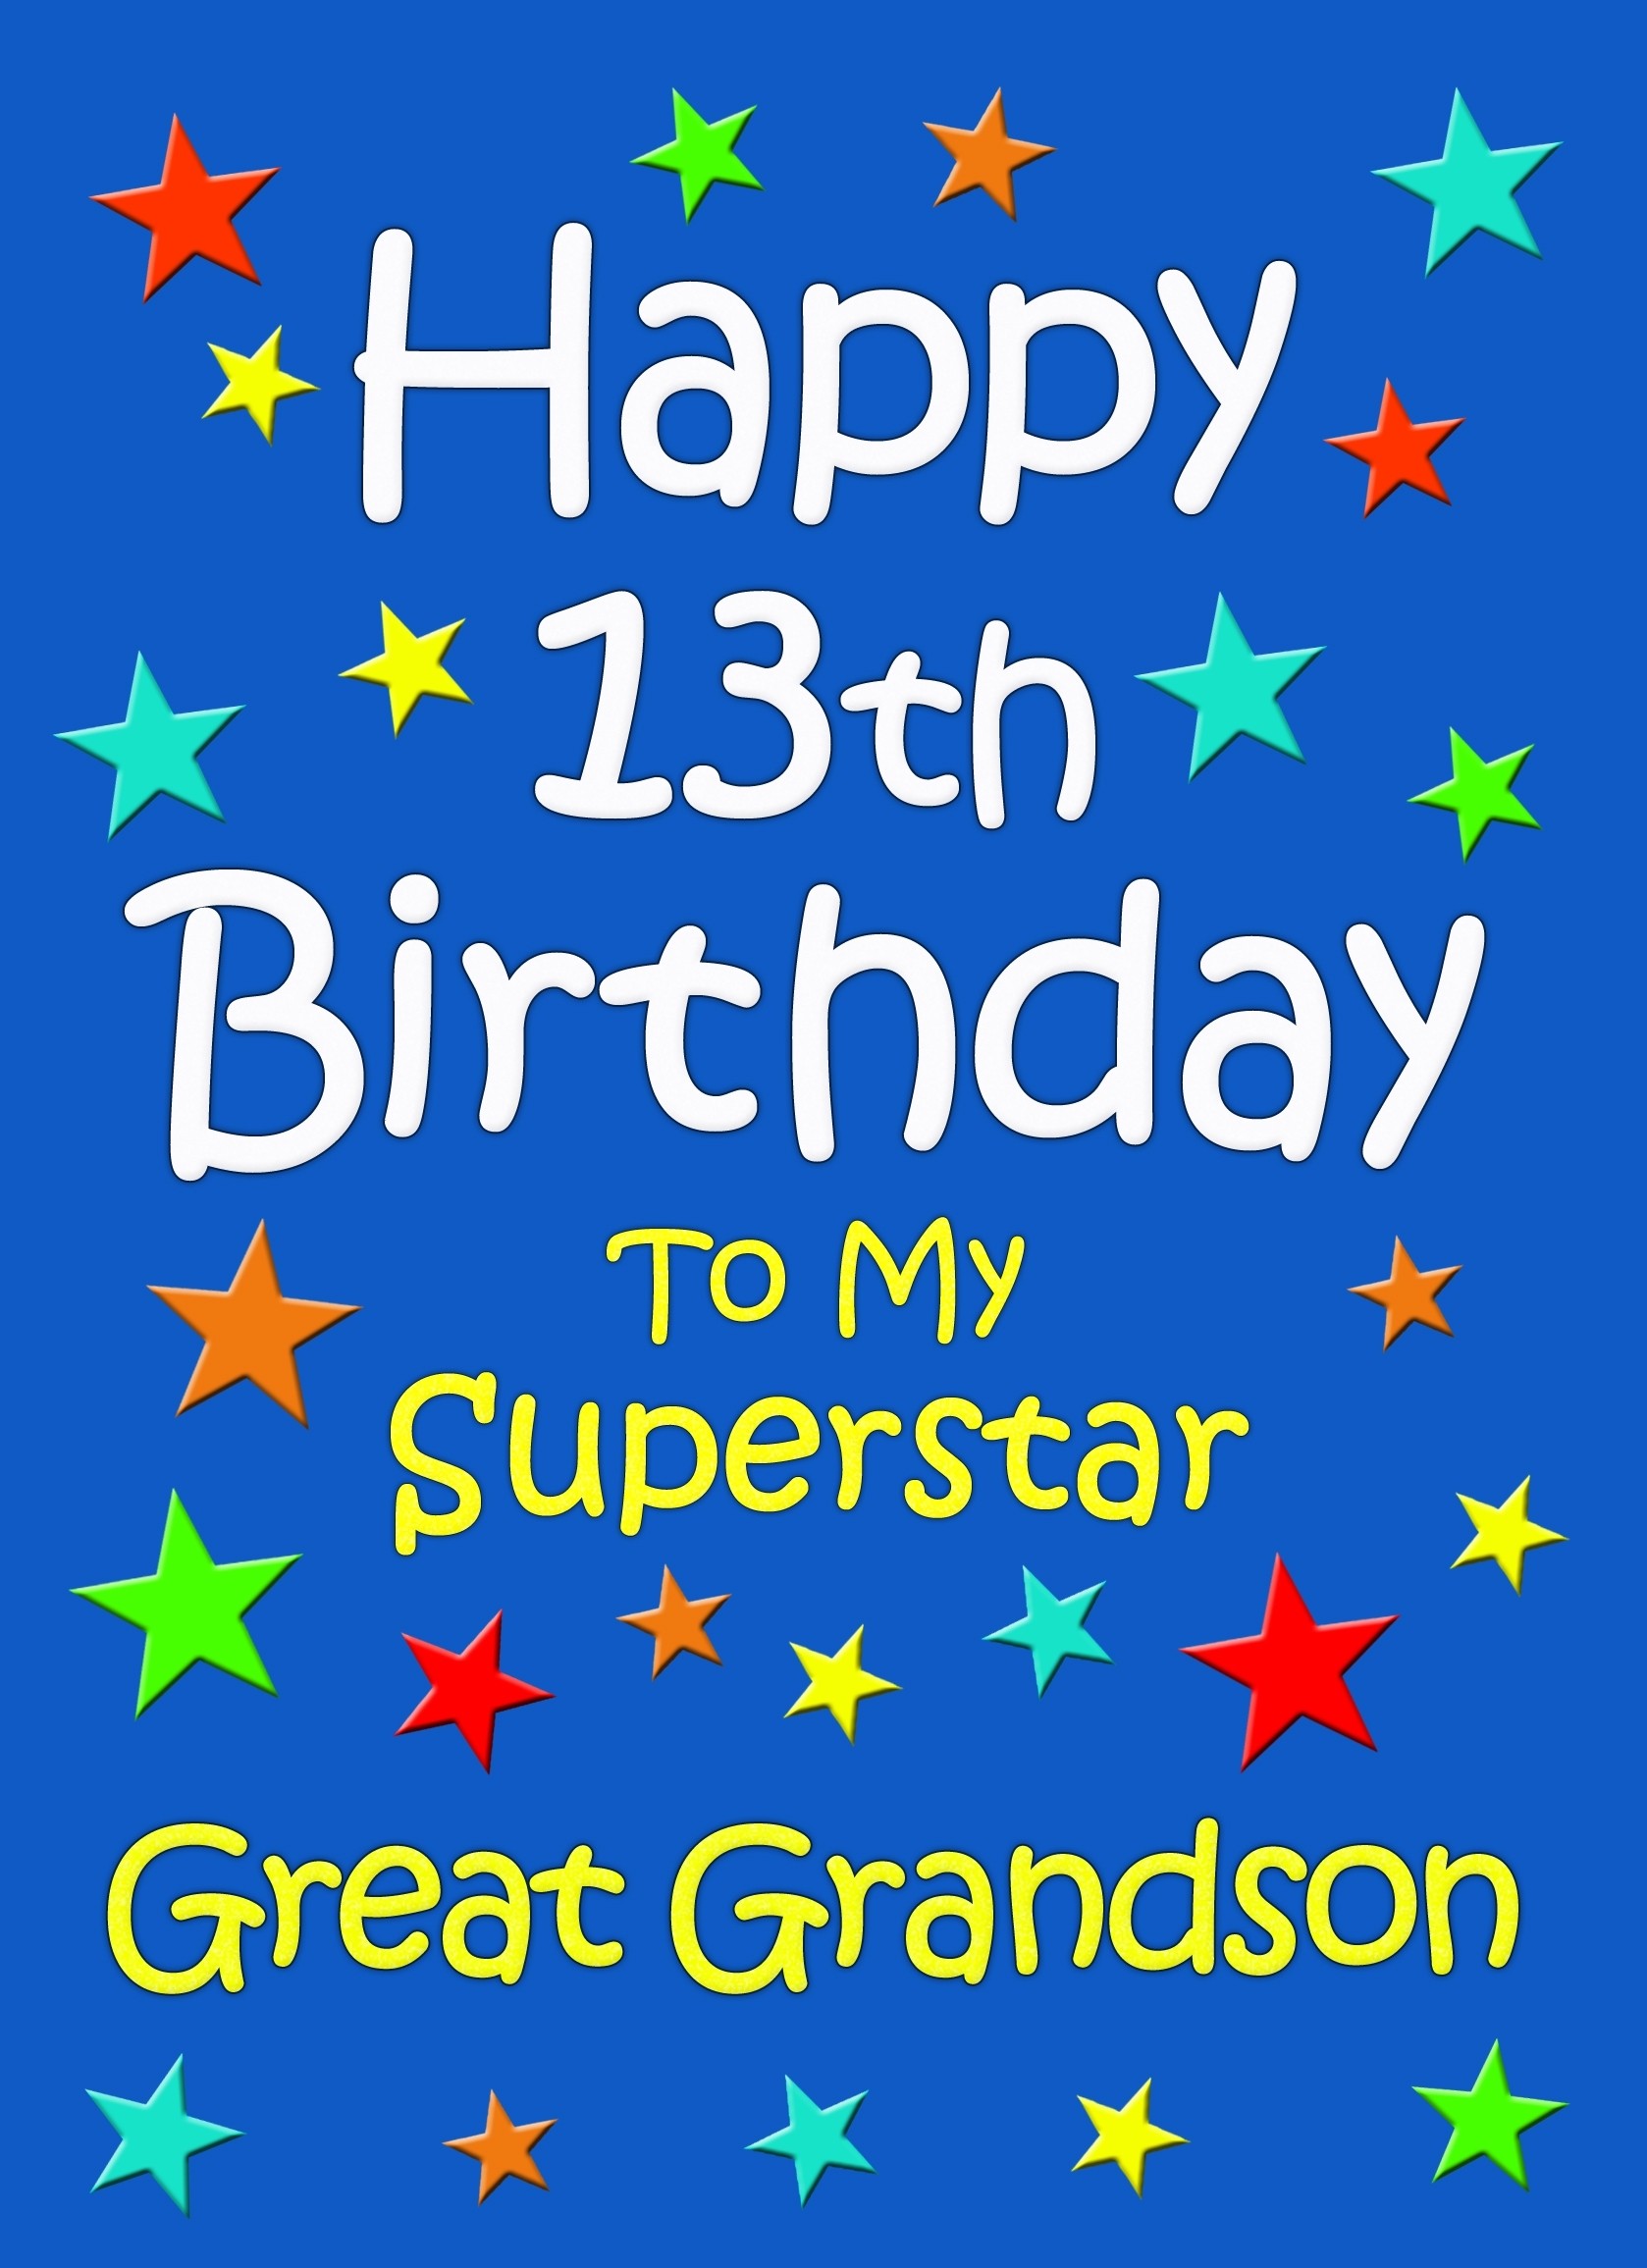 Great Grandson 13th Birthday Card (Blue)